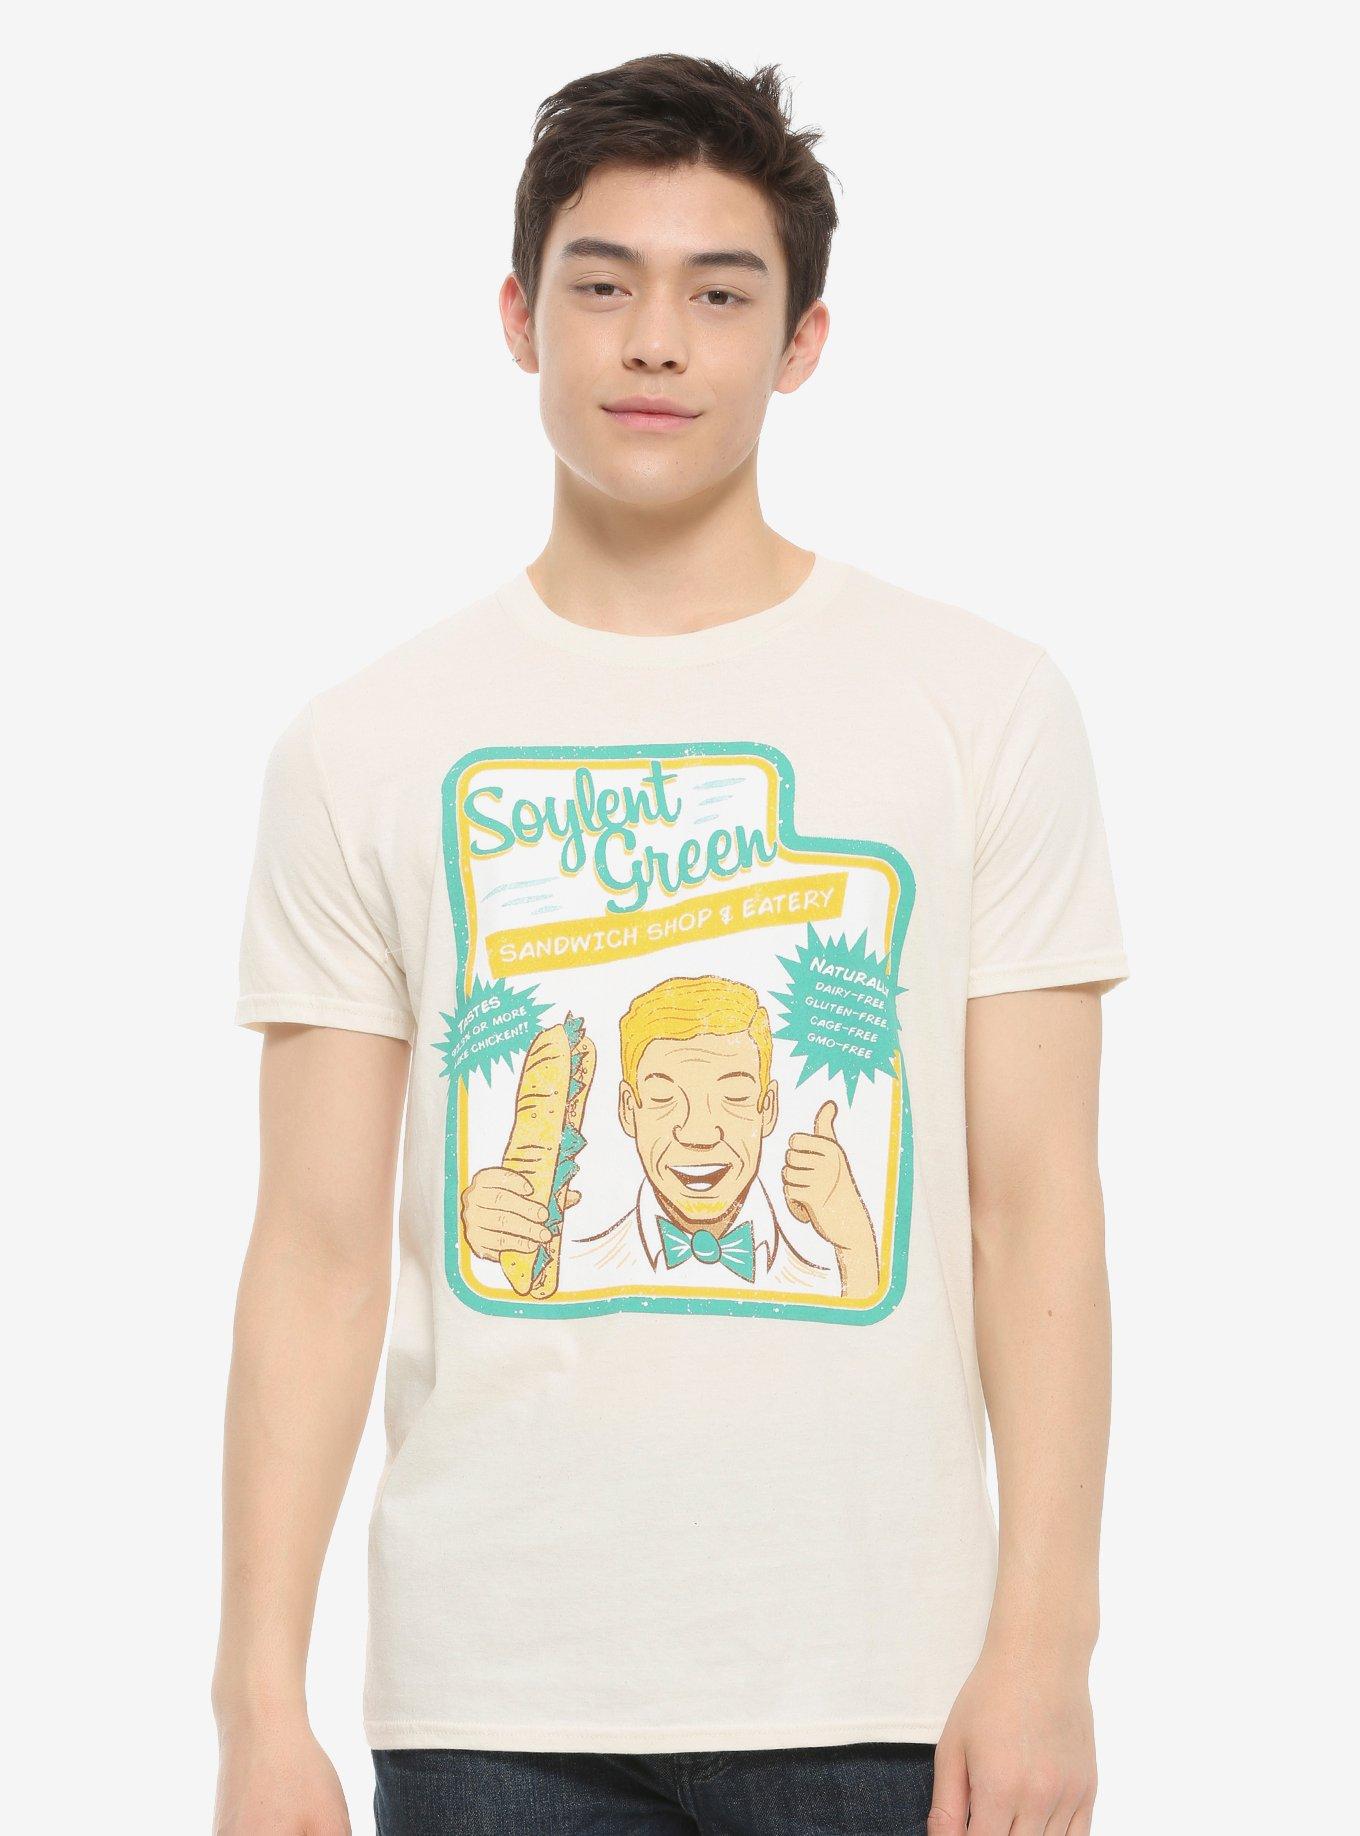 Soylent Green Sandwich Shop T-Shirt By HB Design, BLACK, alternate